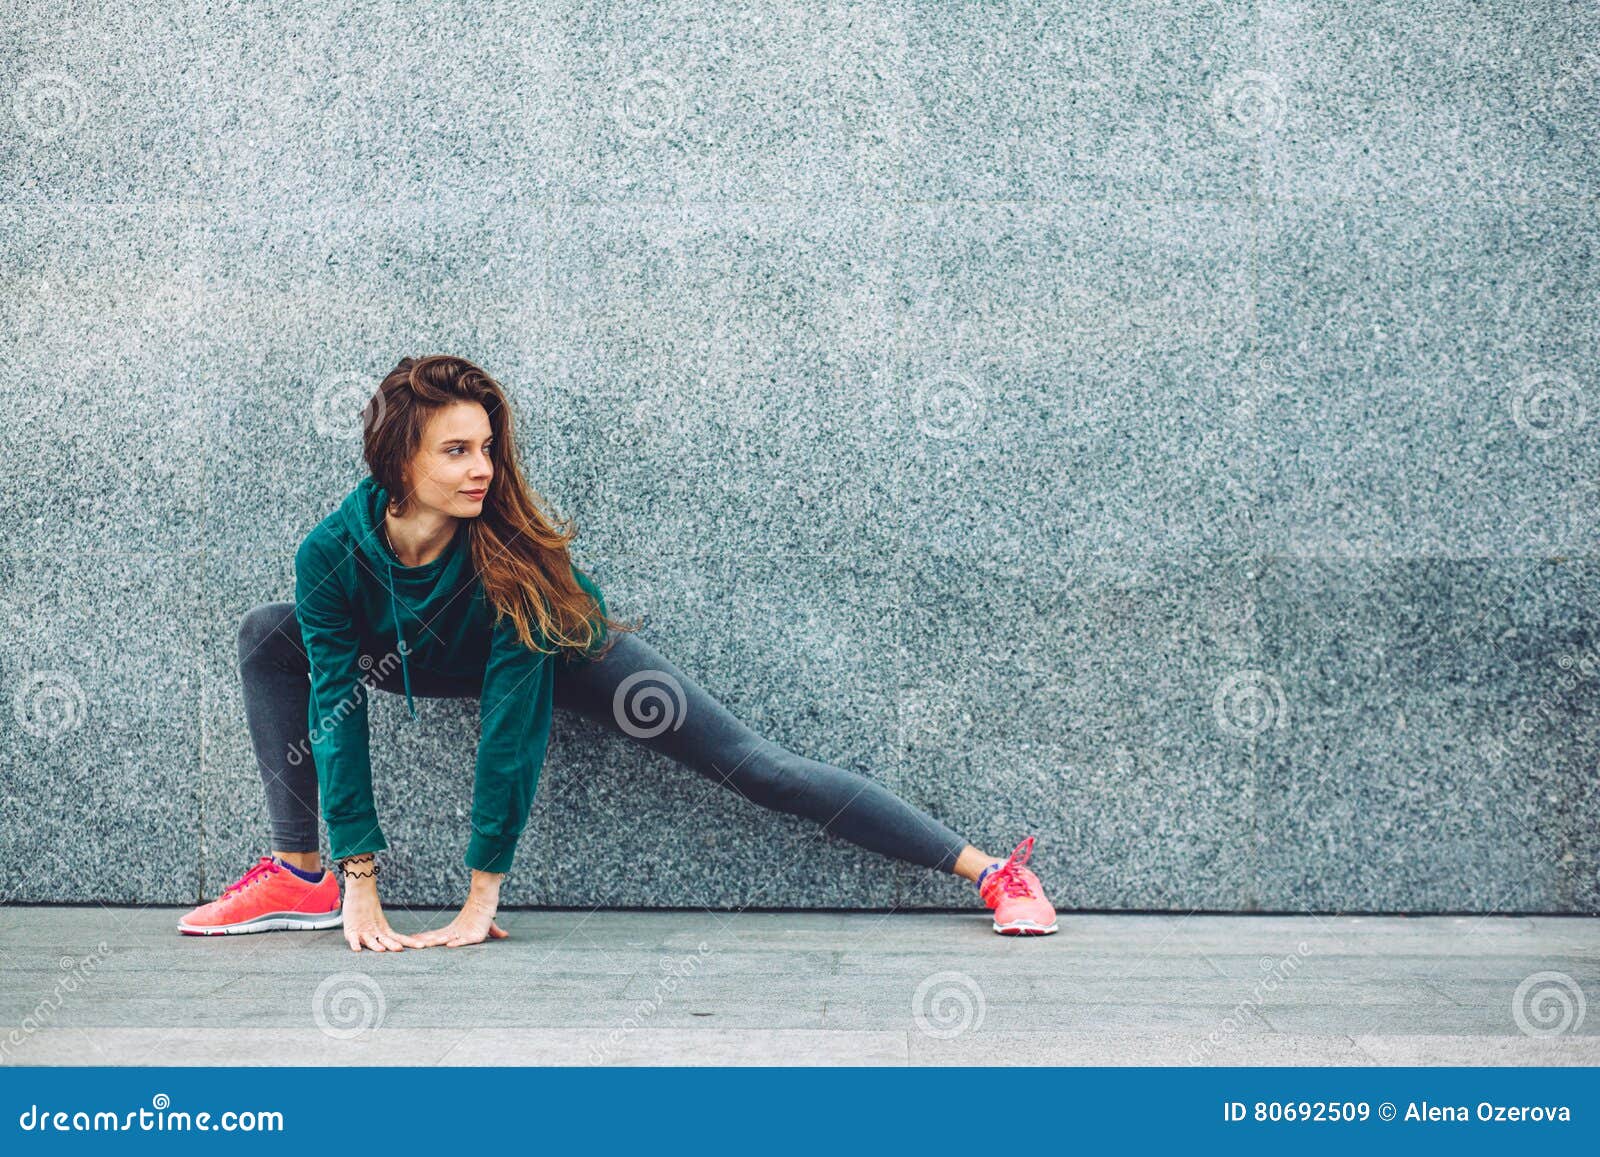 fitness sport girl in the street